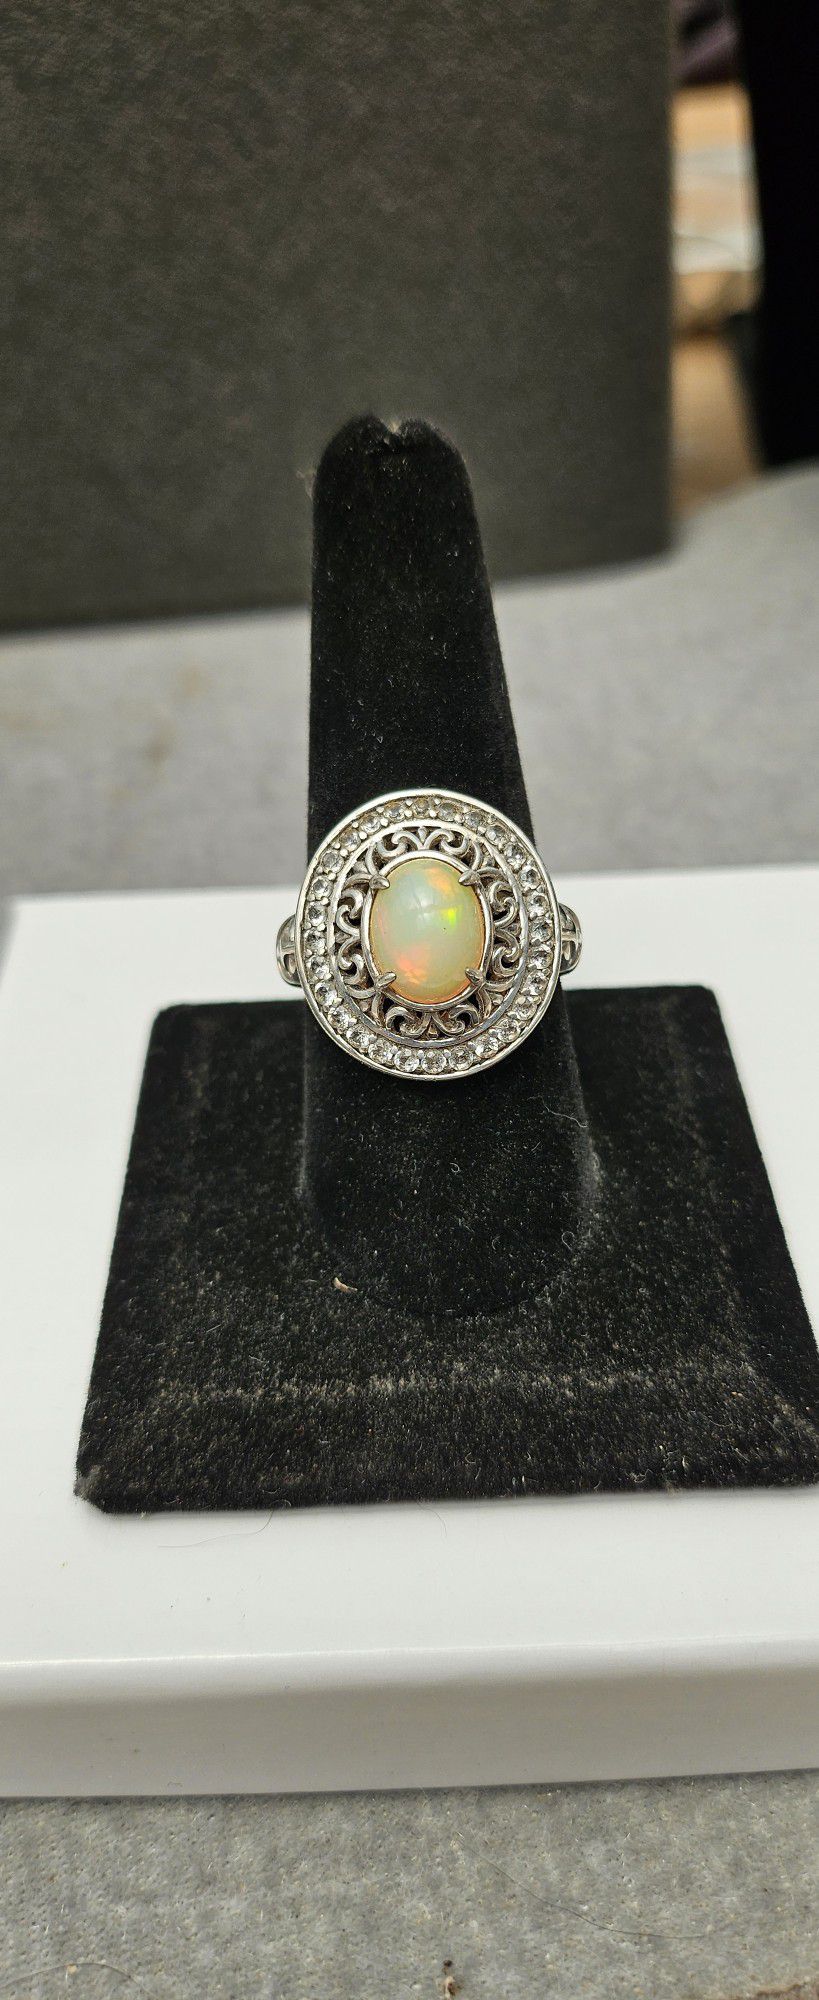 Ethiopian Welo Opal Ring